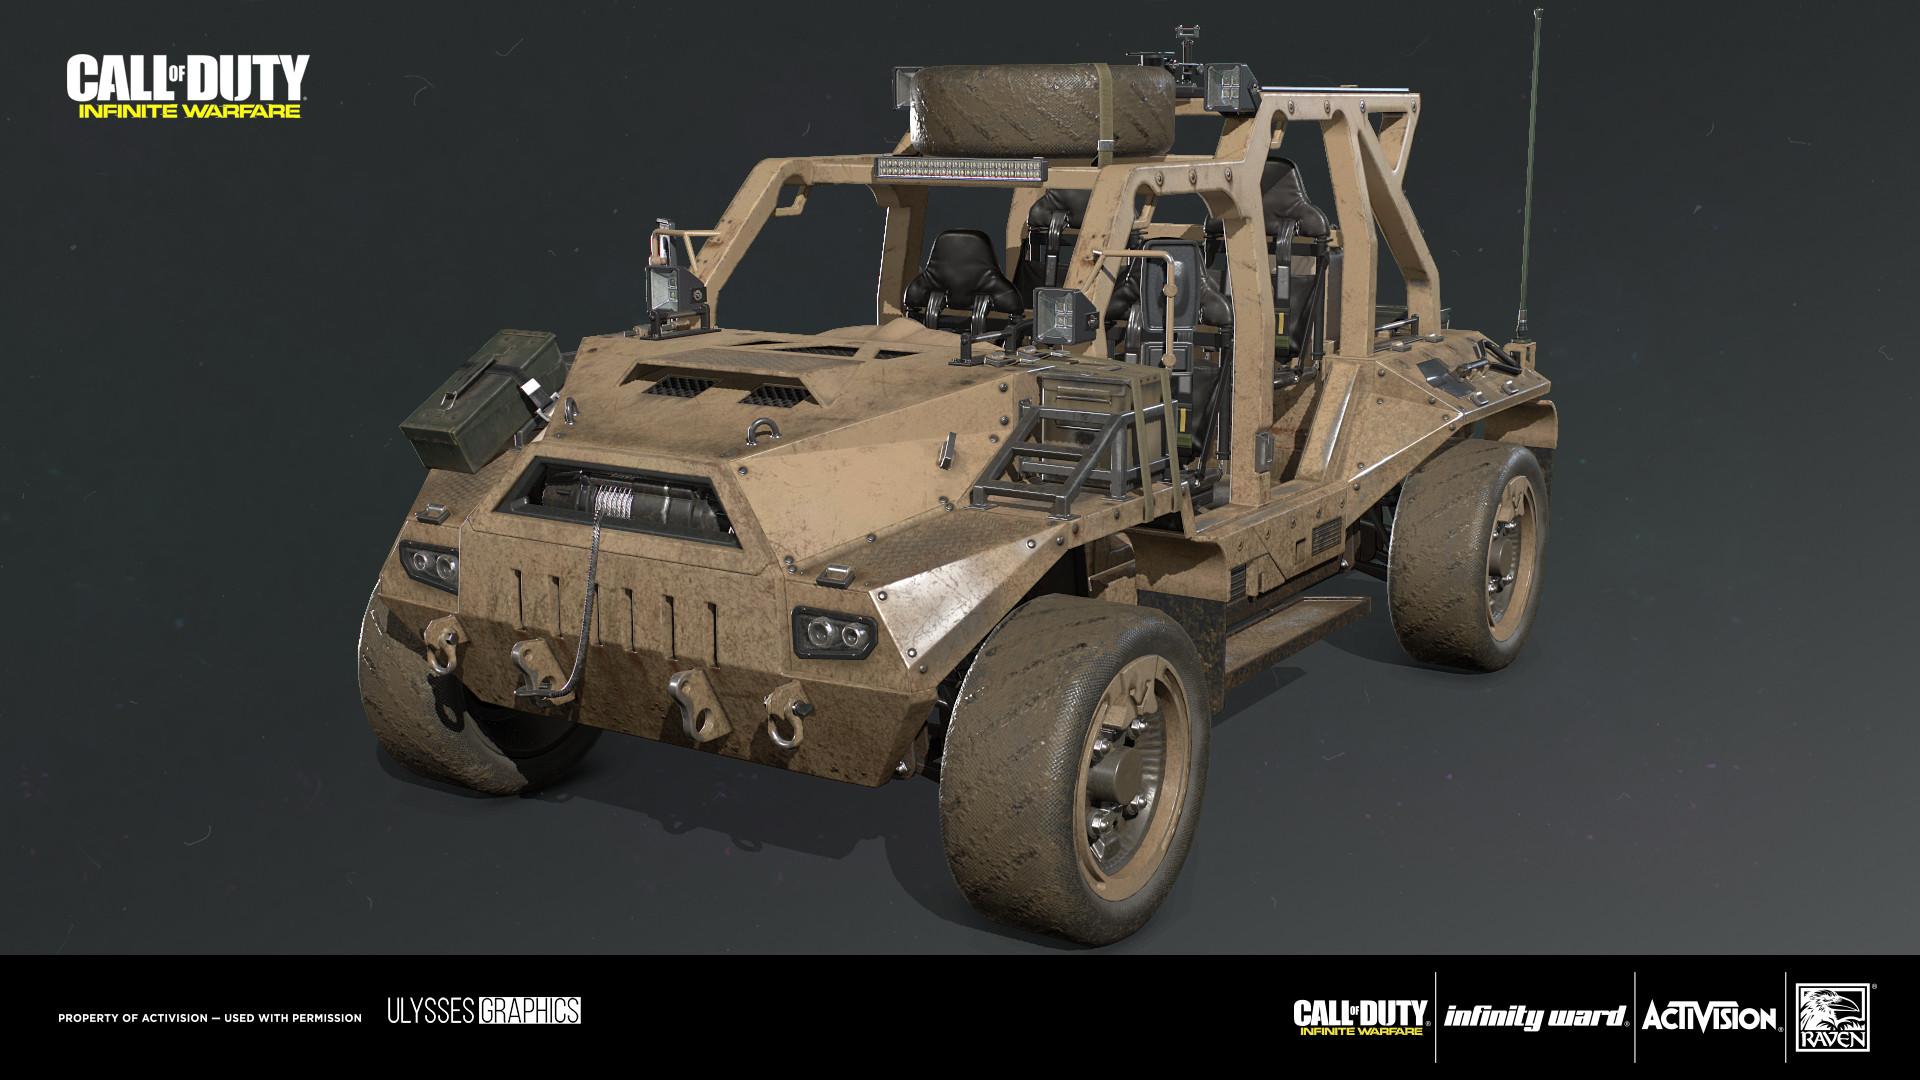 Call of Duty: Infinite Warfare vehicle